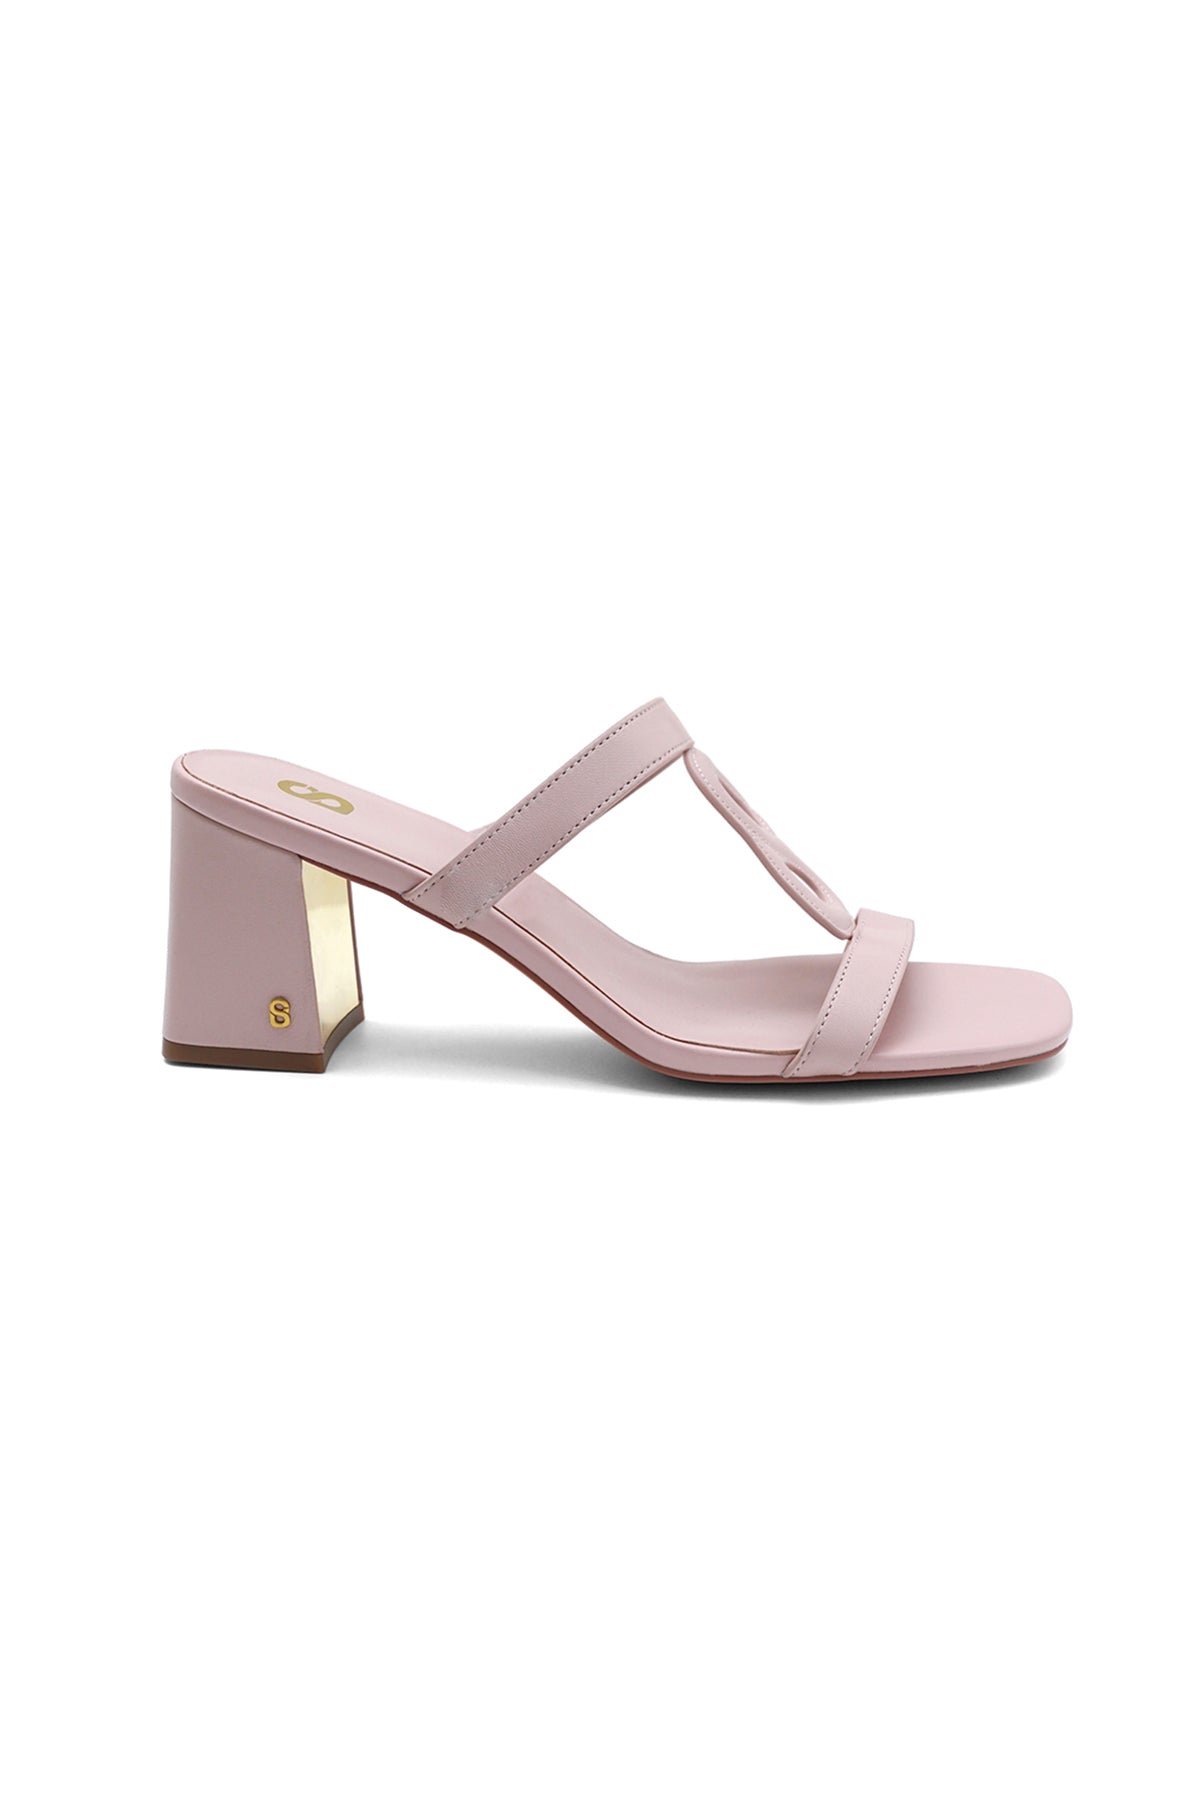 Kefi Heels - Dusty Pink